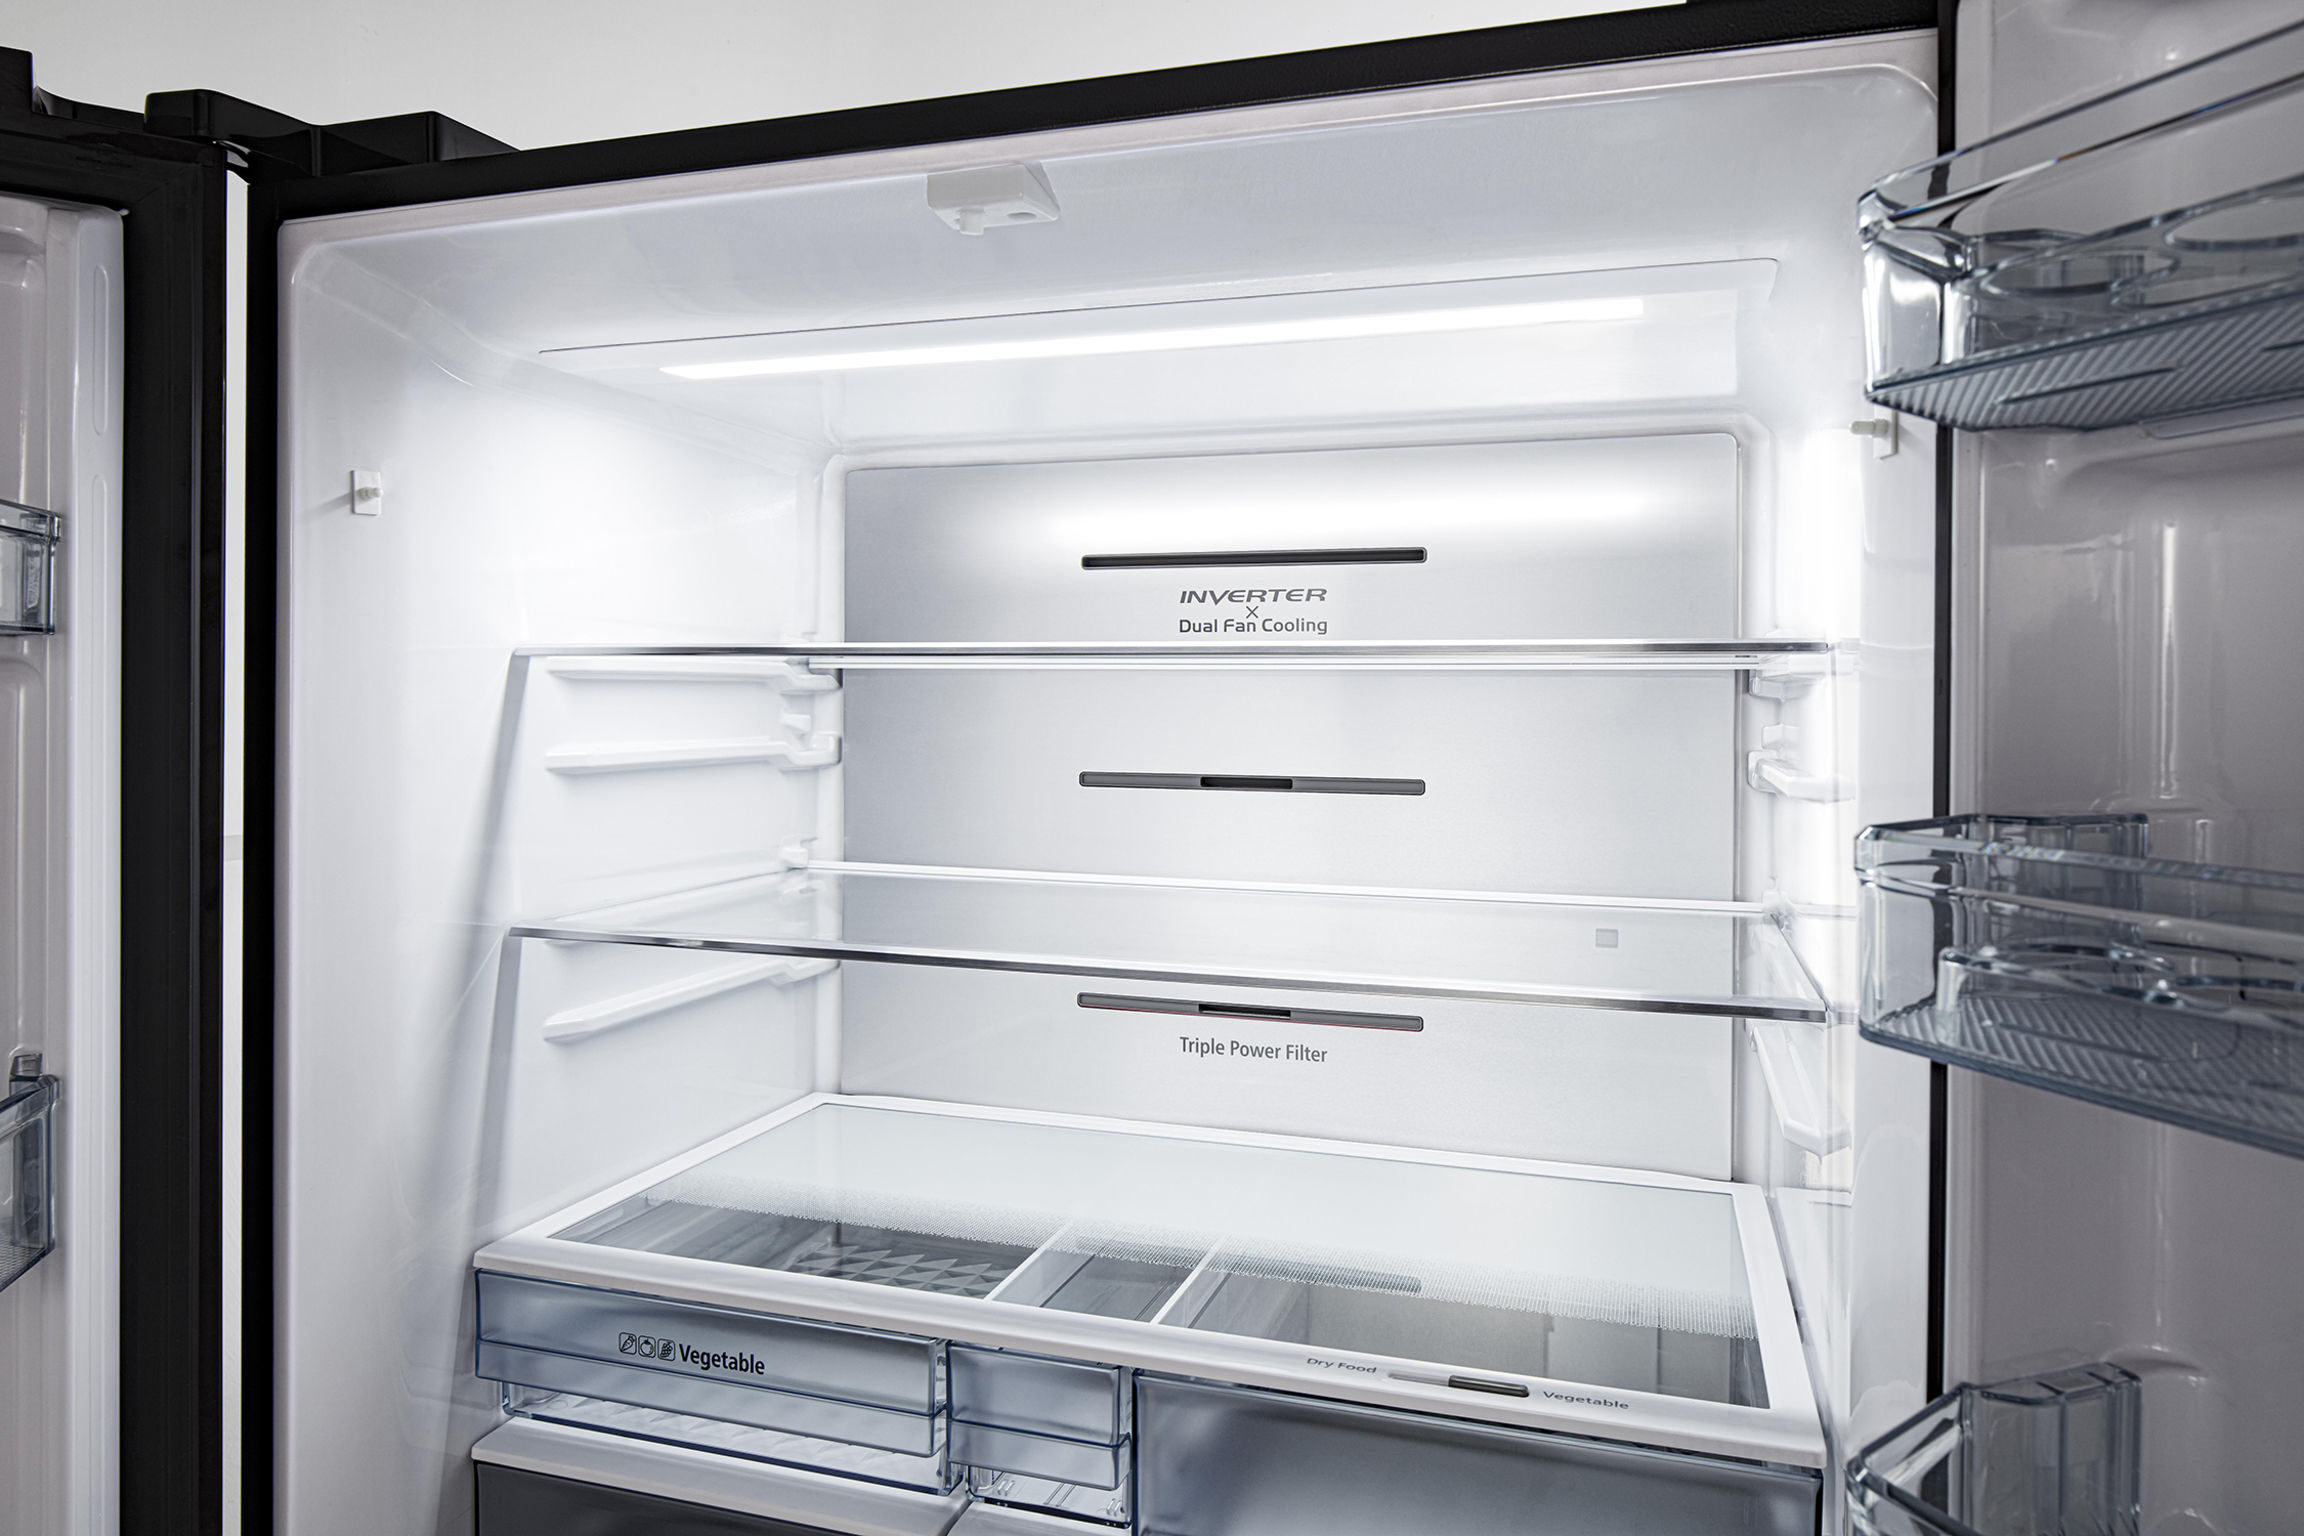 Hitachi Refrigerator FBF Luxury Series